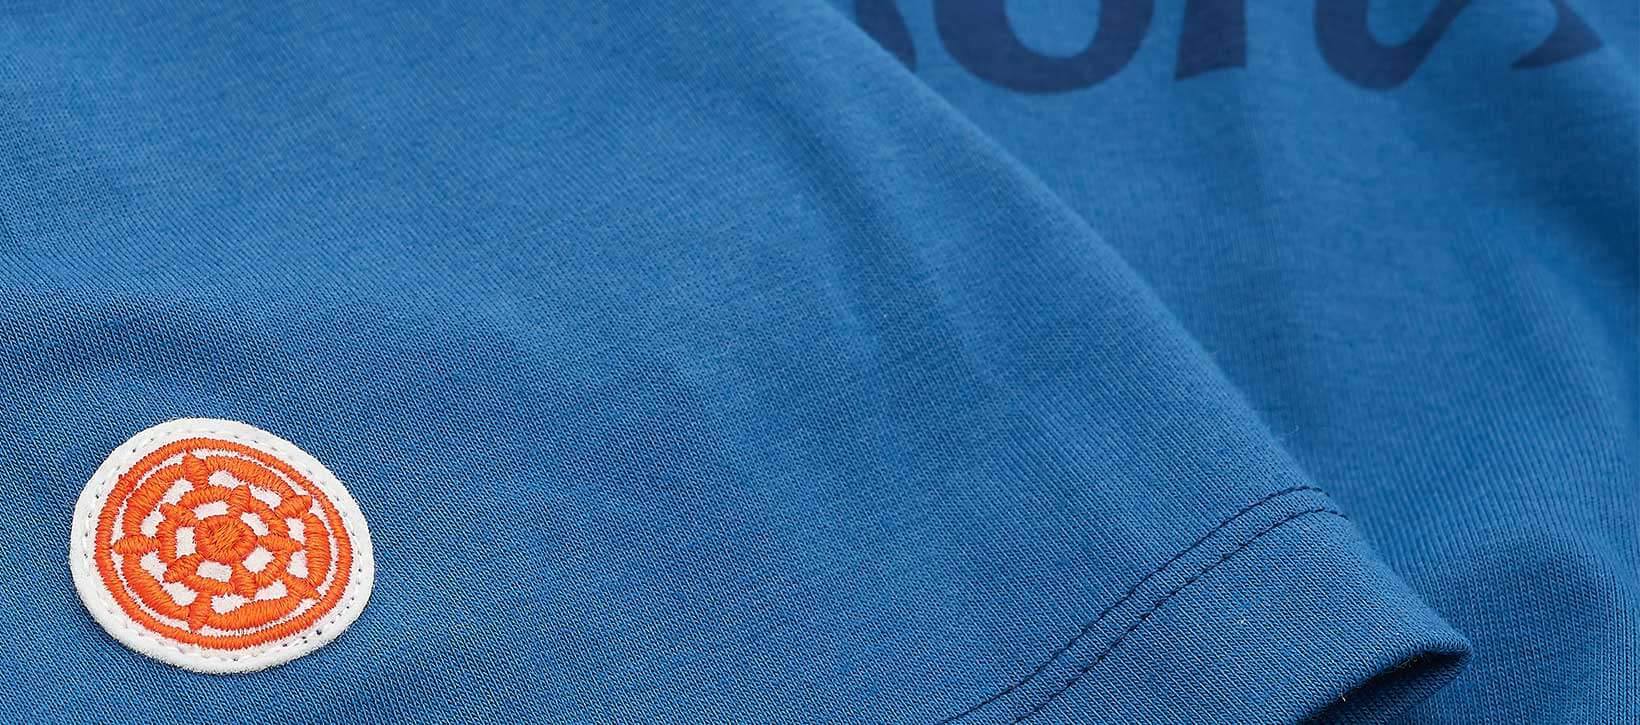 Cyling T-Shirt detail